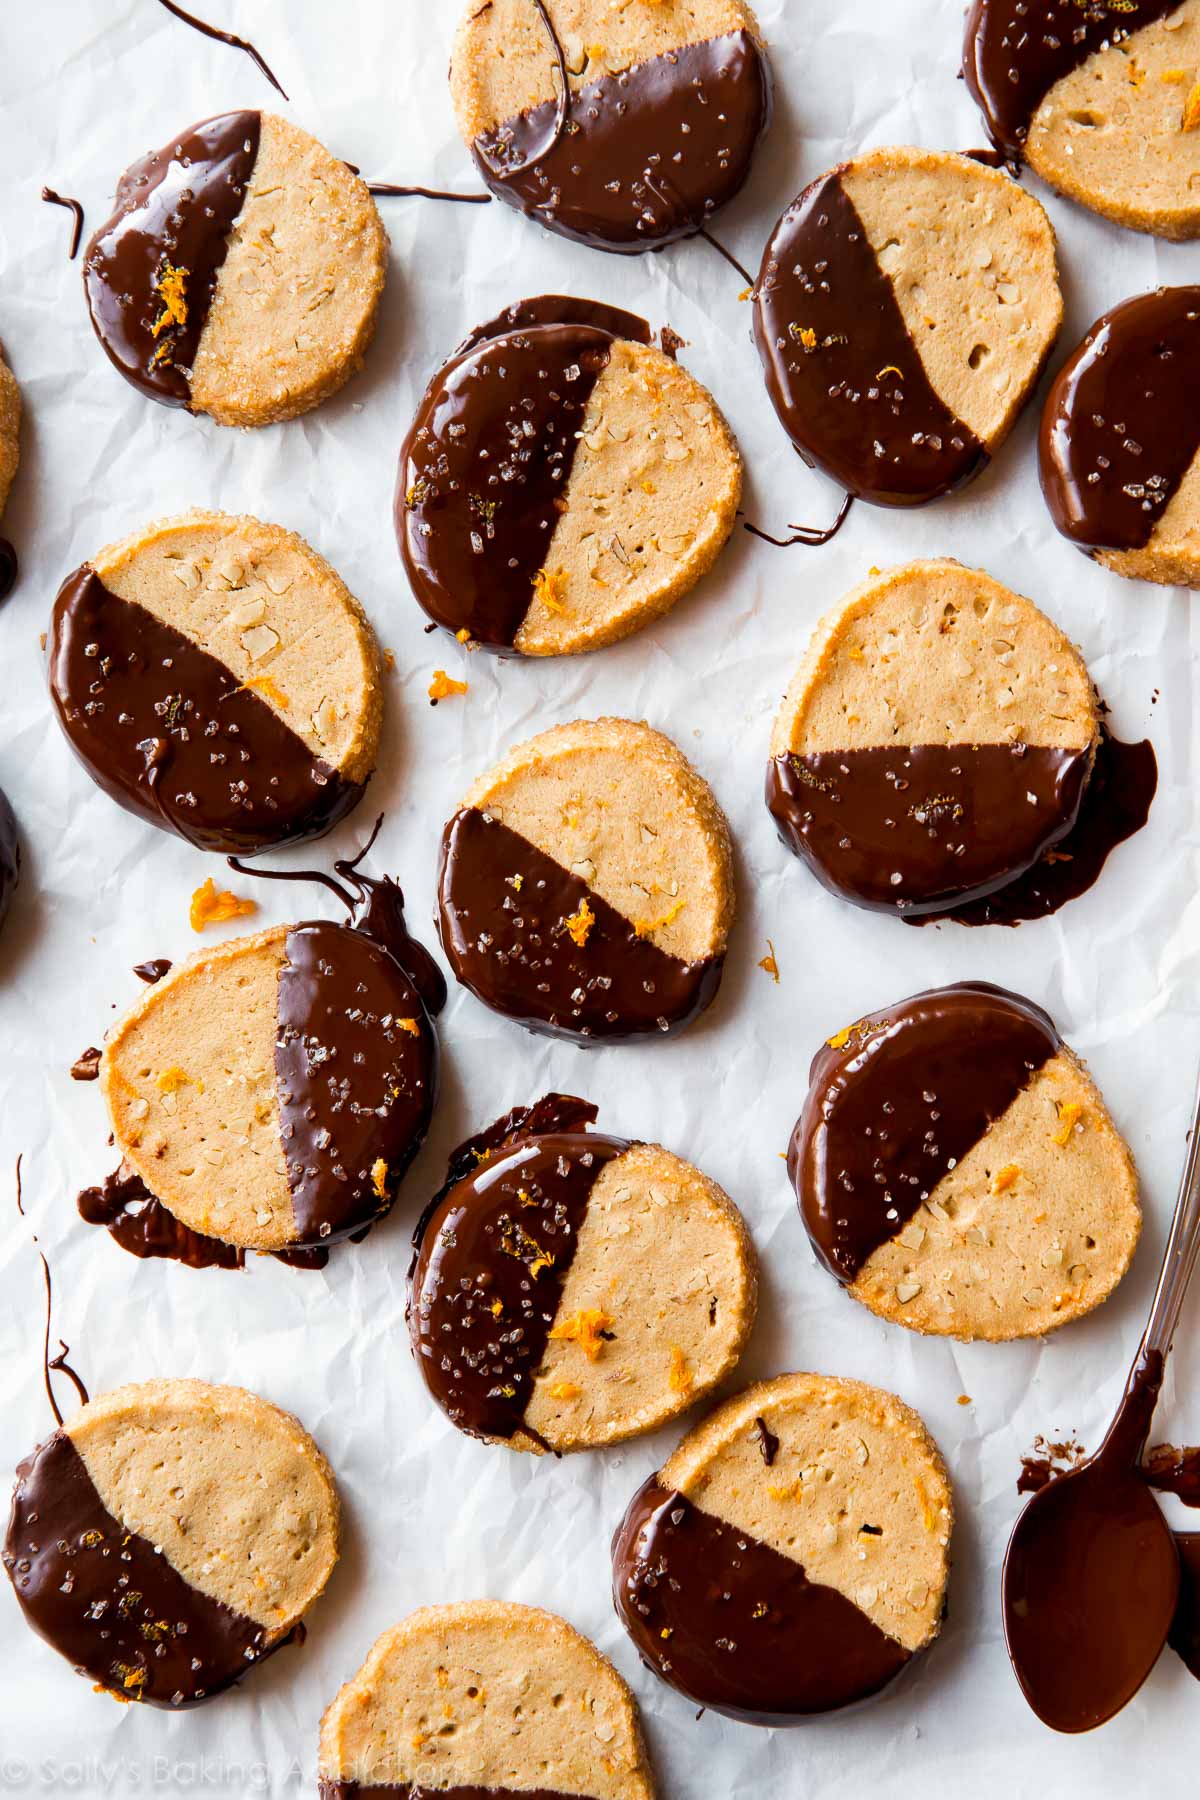 orange slice and bake cookies with half of each cookie dipped in dark chocolate